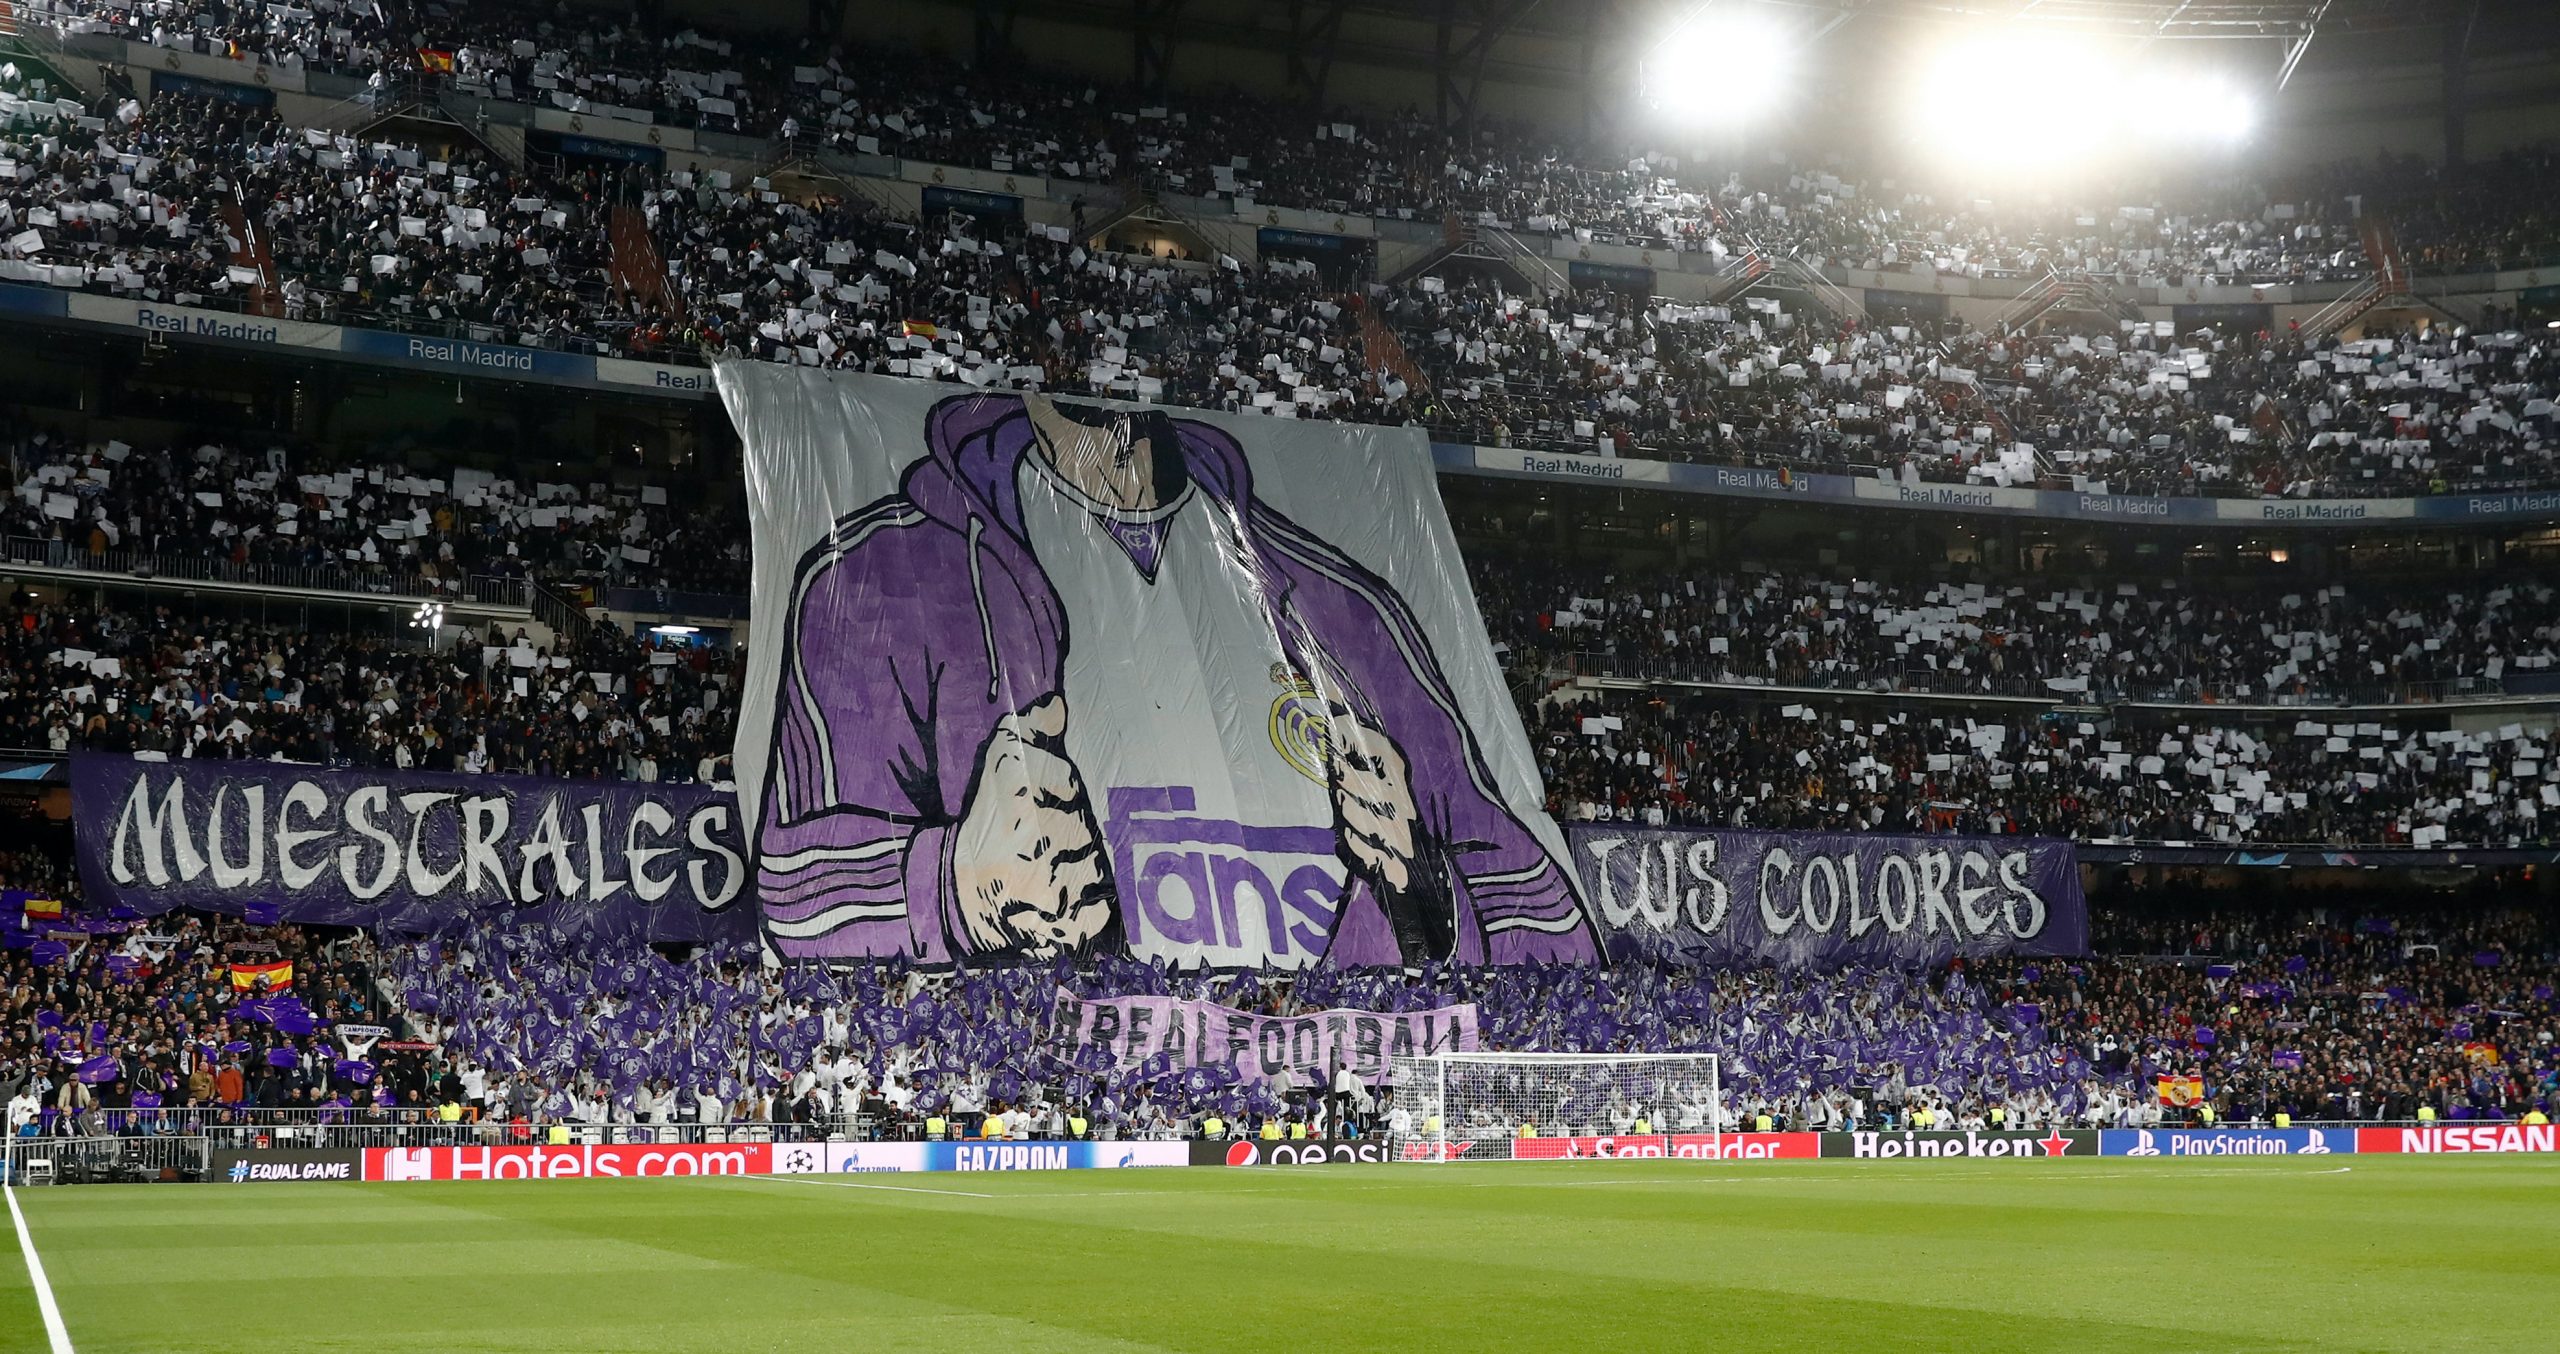 Nach 559 Tagen dürfen wieder Real-Madrid-Fans ins Estadio Santiago Bernabéu